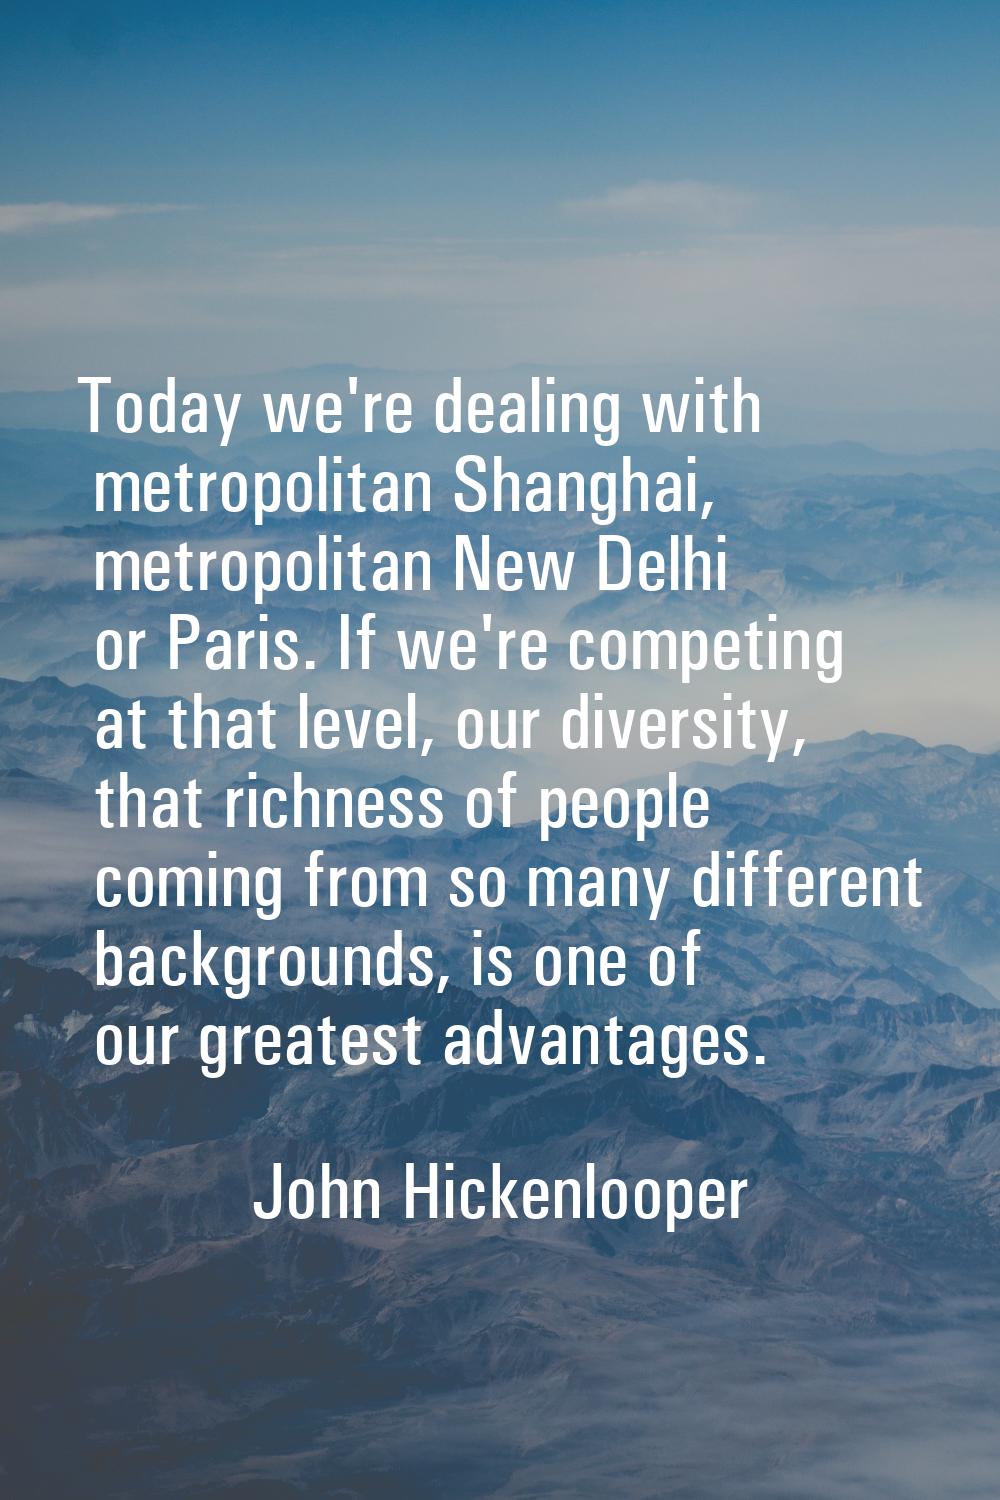 Today we're dealing with metropolitan Shanghai, metropolitan New Delhi or Paris. If we're competing